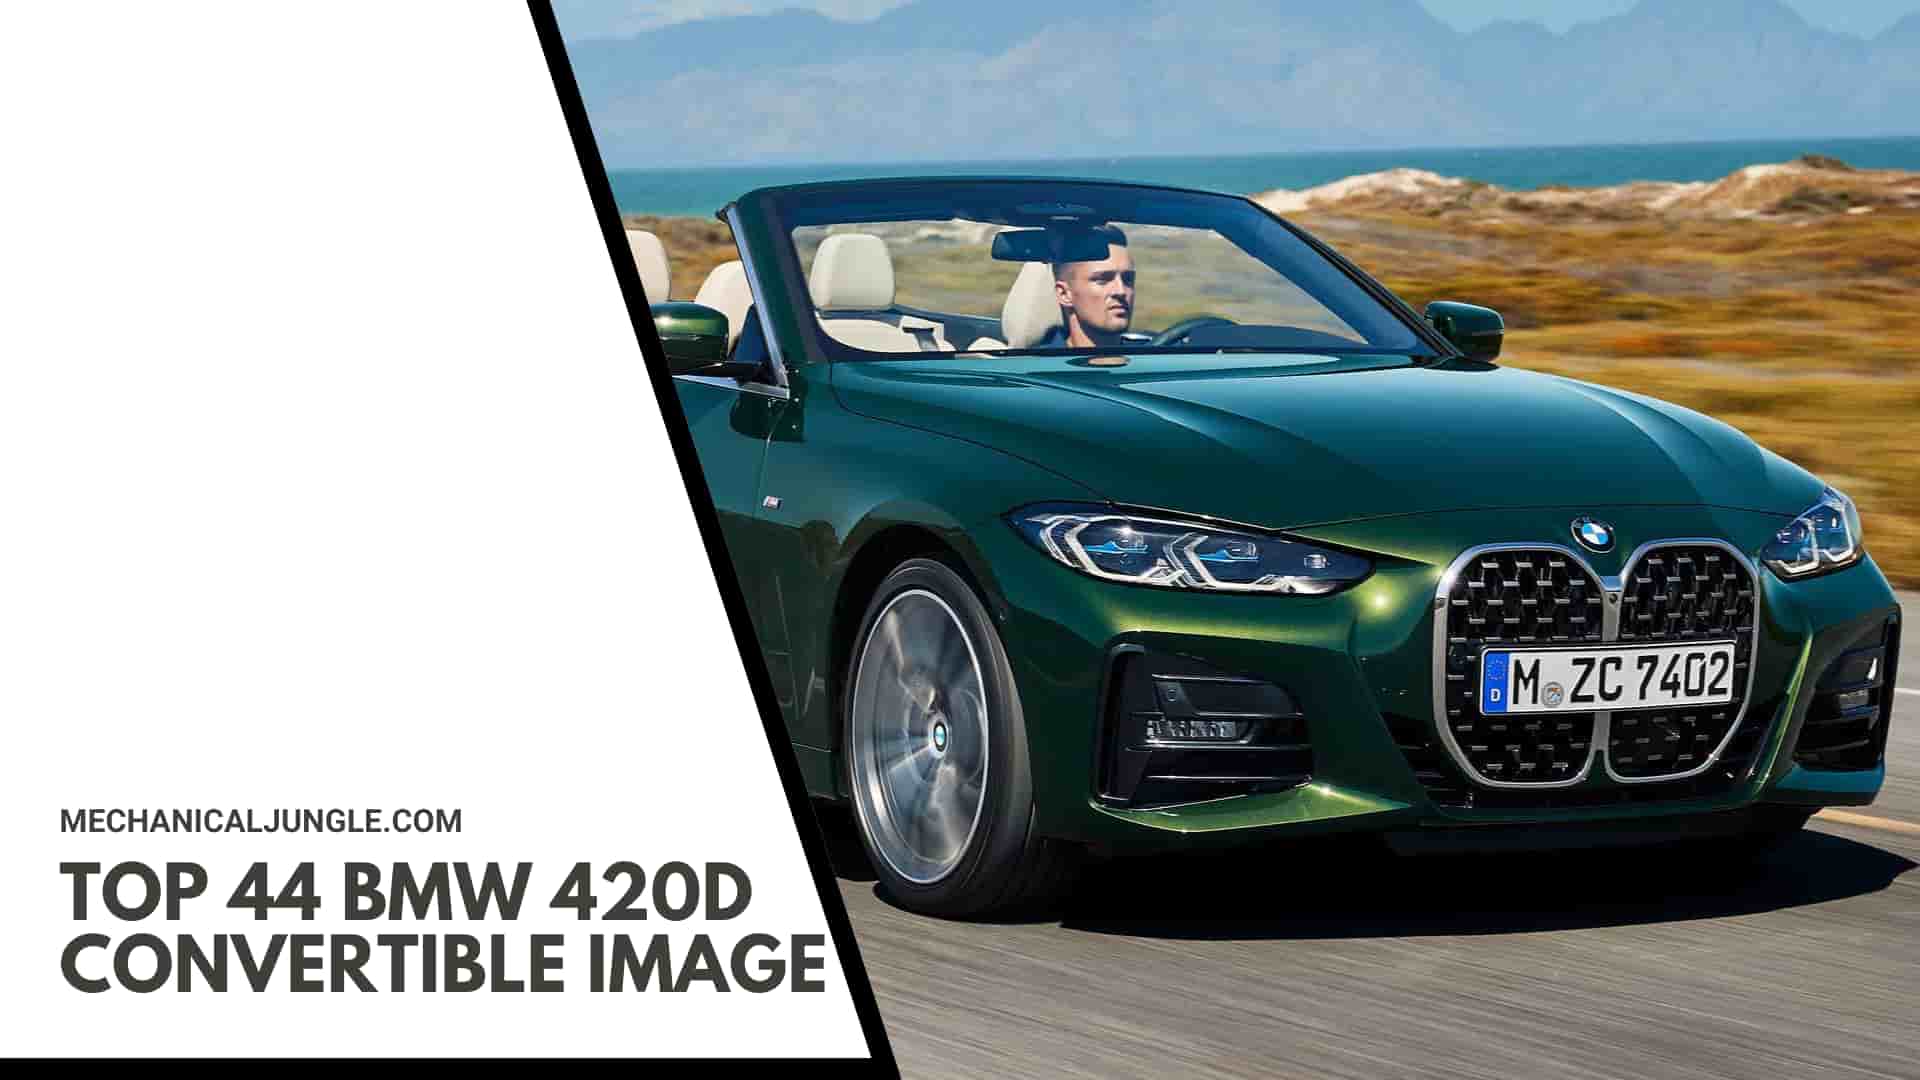 Top 44 BMW 420d Convertible Image